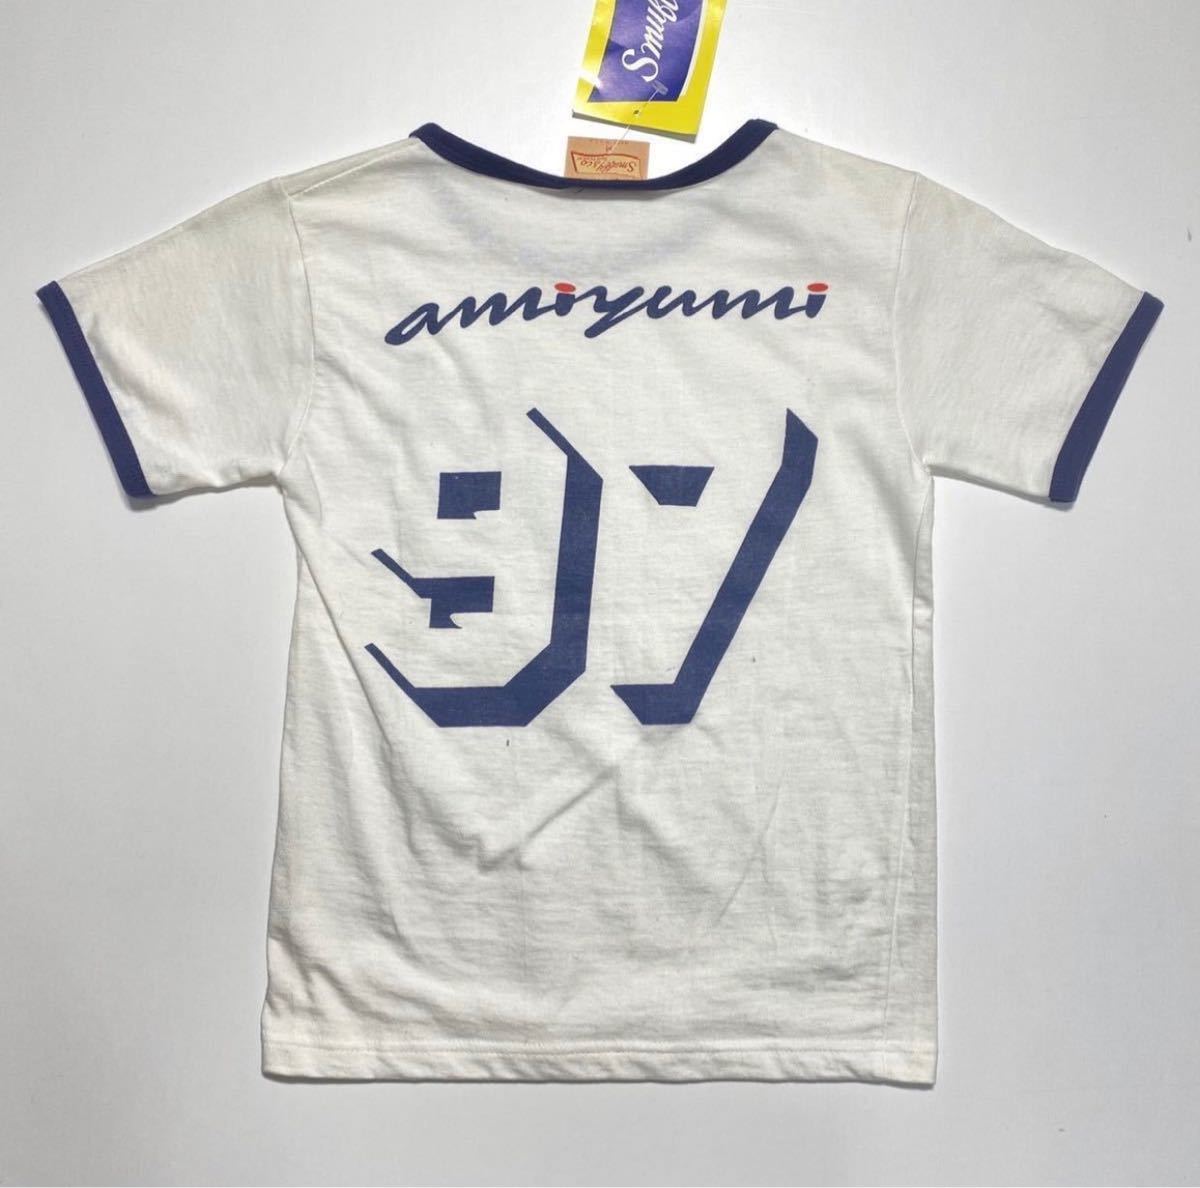 【M】1990s DeadStock Smuffy&co PUFFY Kids Tee 1990年代 デッドストック パフィー キッズサイズ Tシャツ 子供サイズ USA製 Y441_画像2